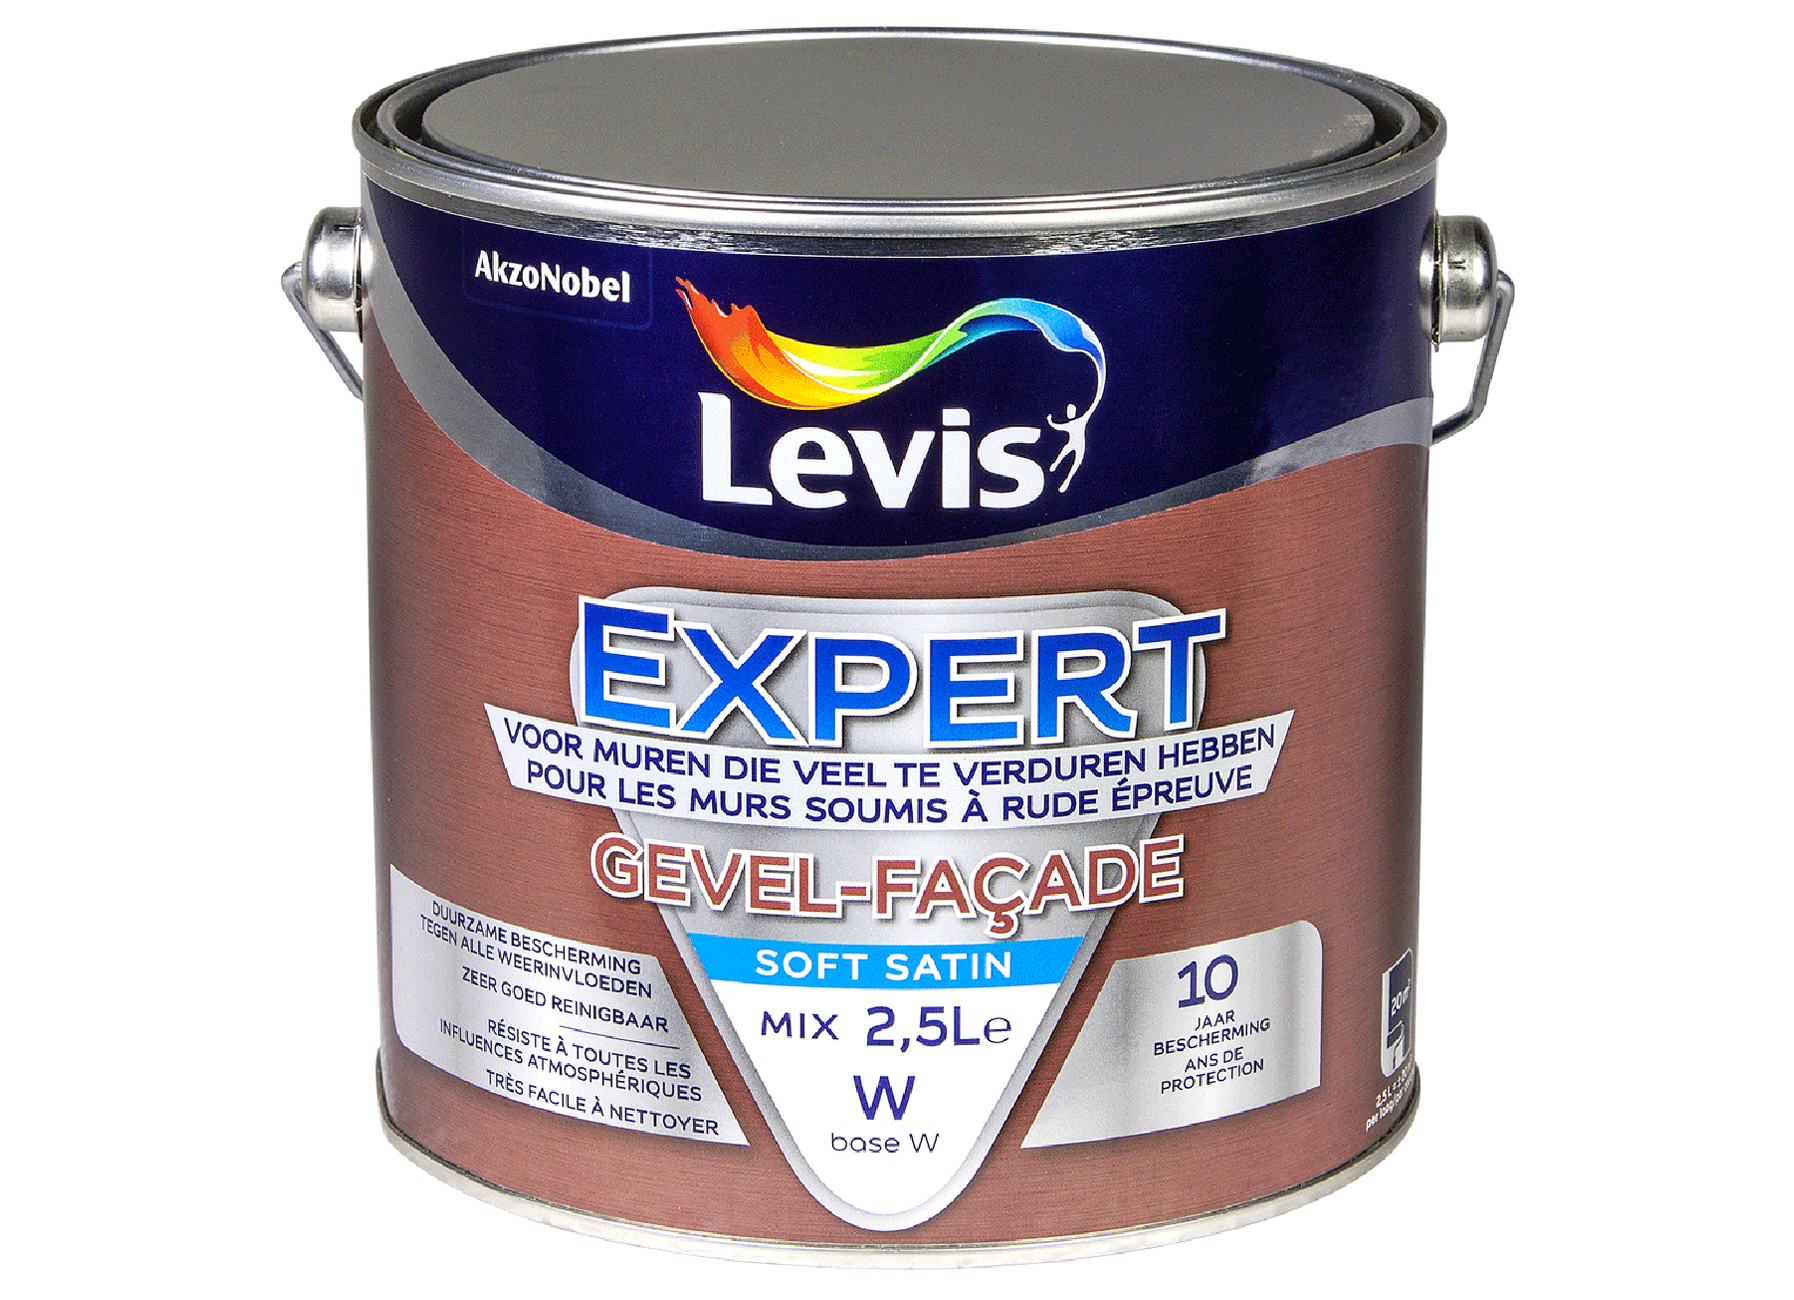 LEVIS EXPERT FACADE BASE W 2,5L